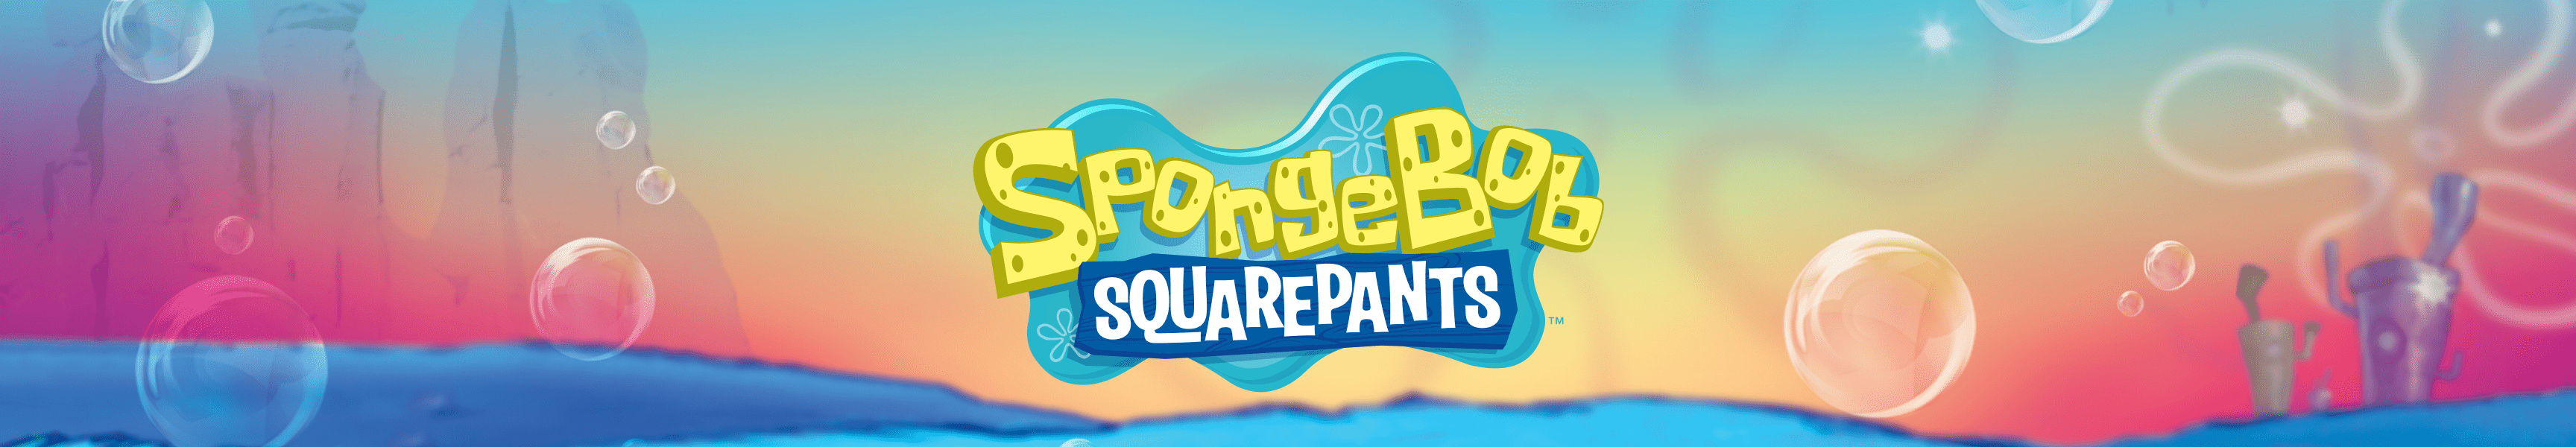 SpongeBob SquarePants Home & Office